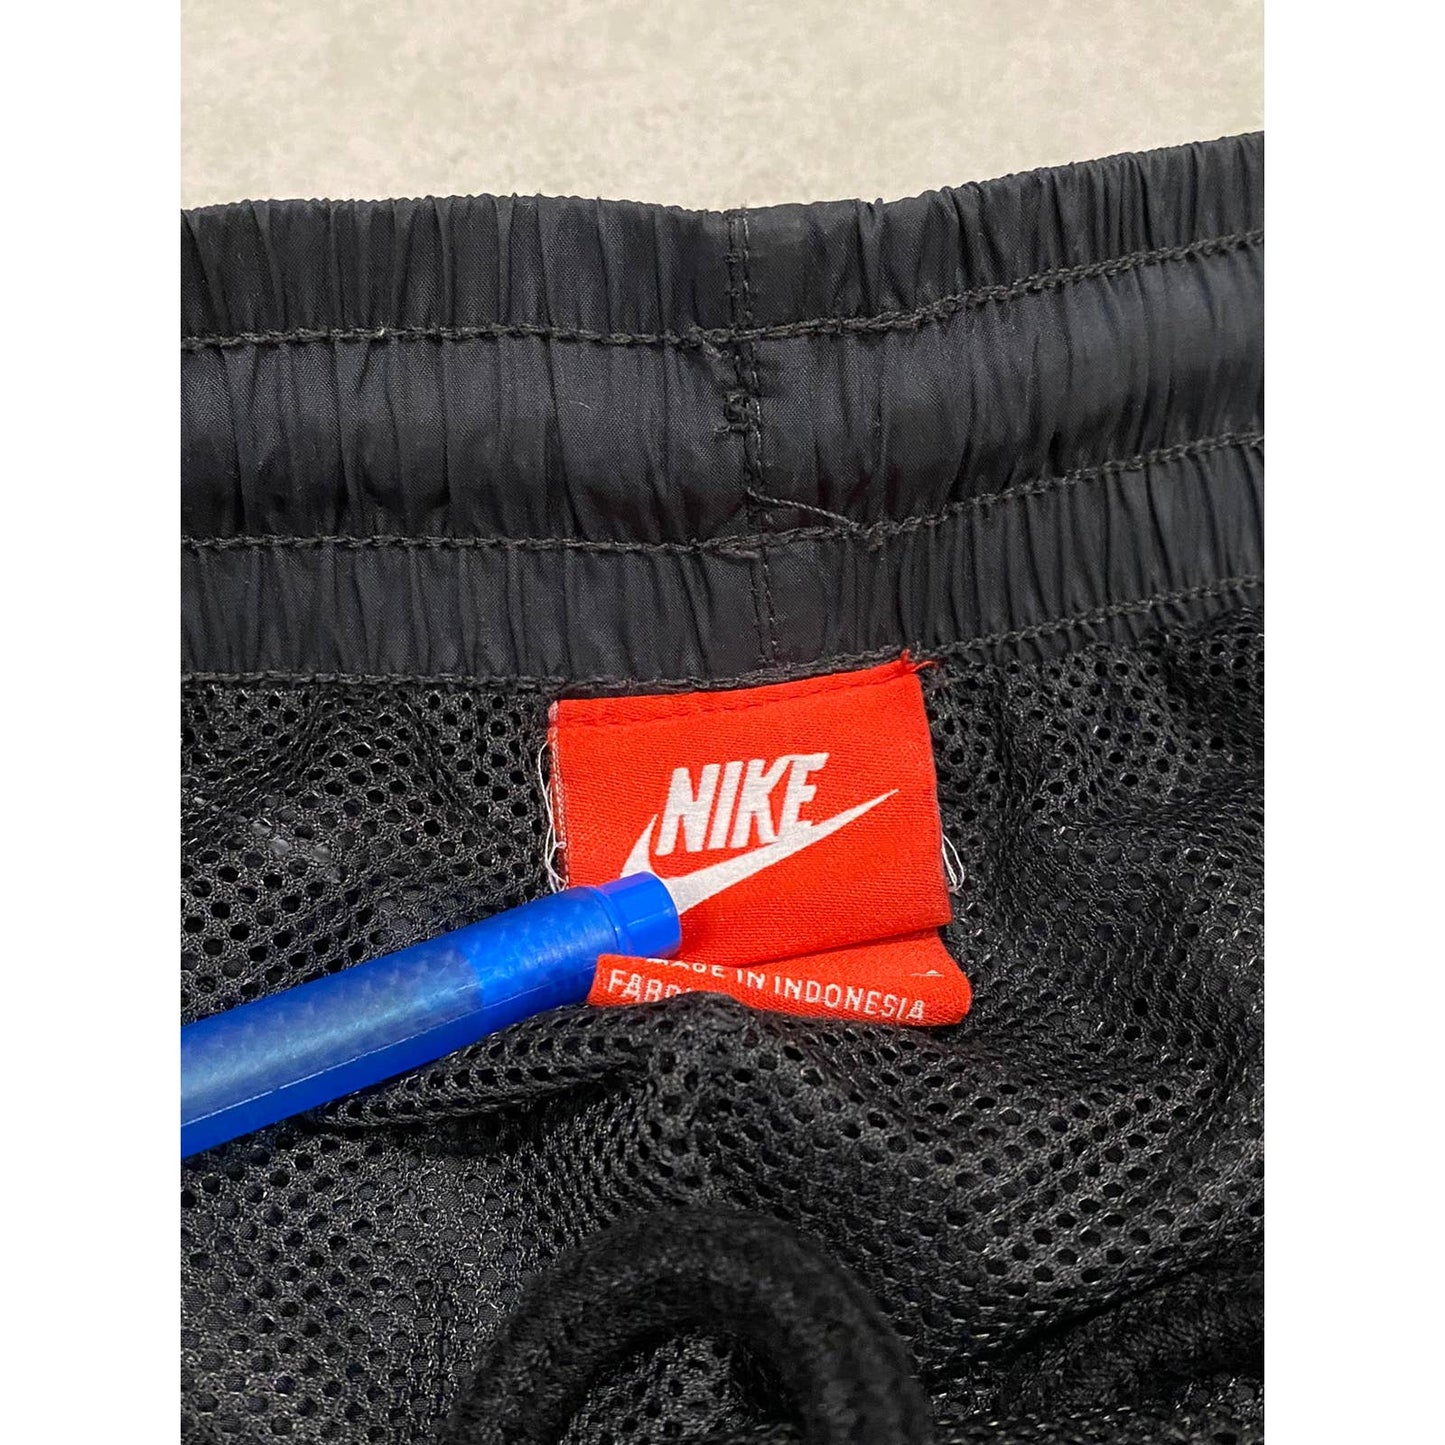 Nike vintage black track pants small swoosh 2000s